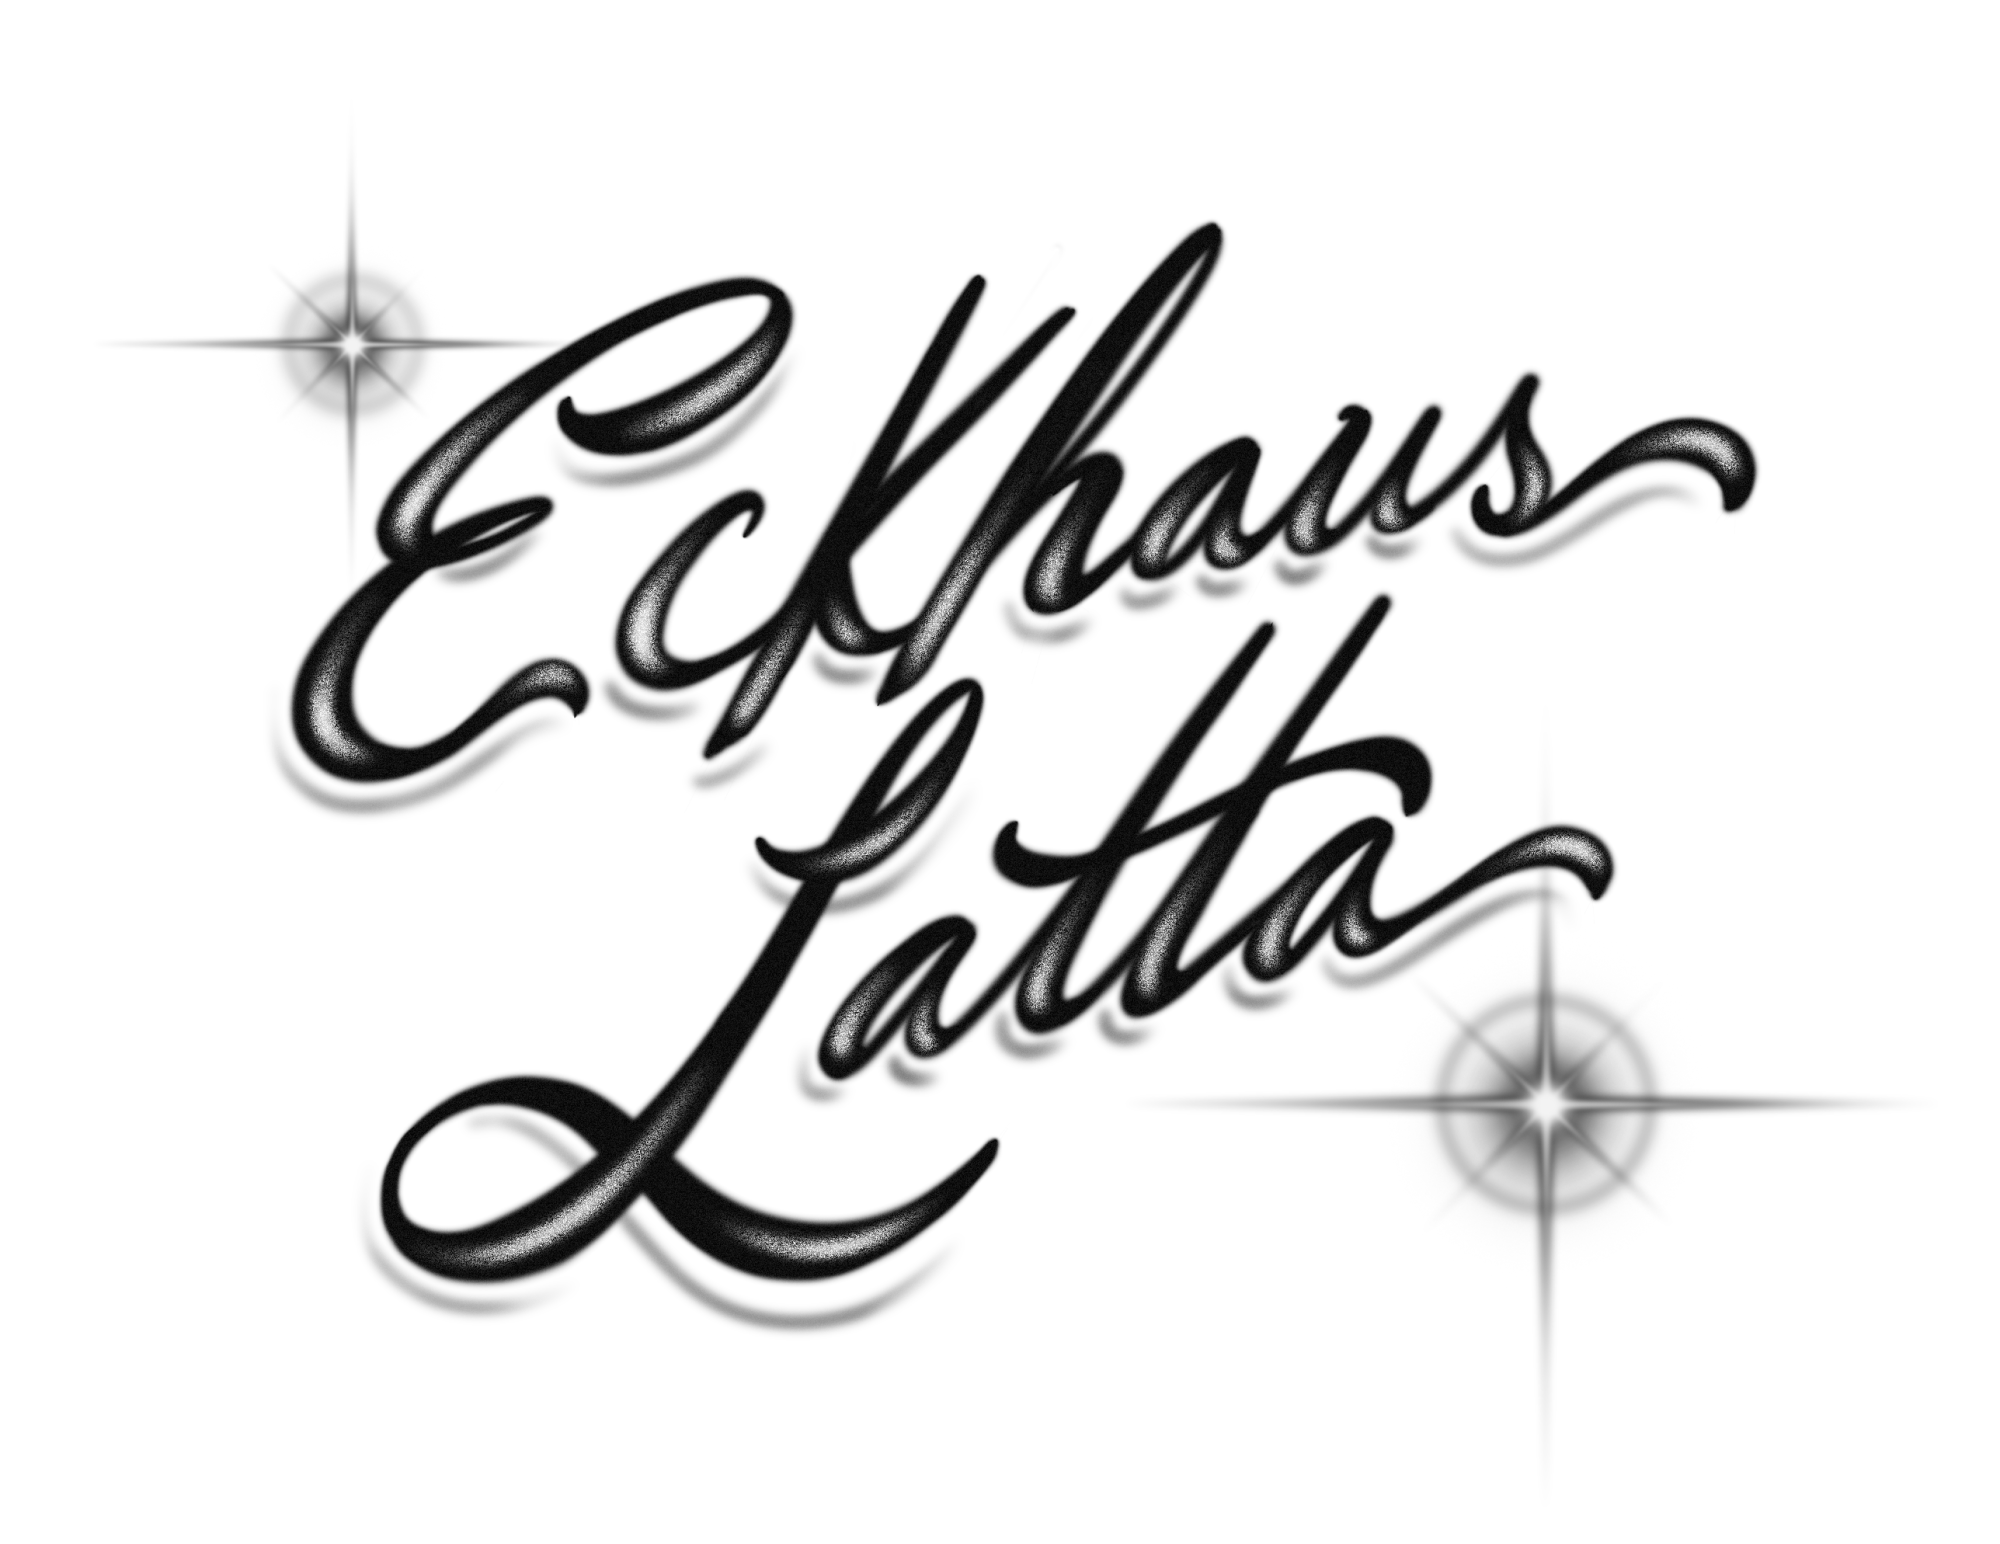 scripts that reads “Eckhaus Latta”